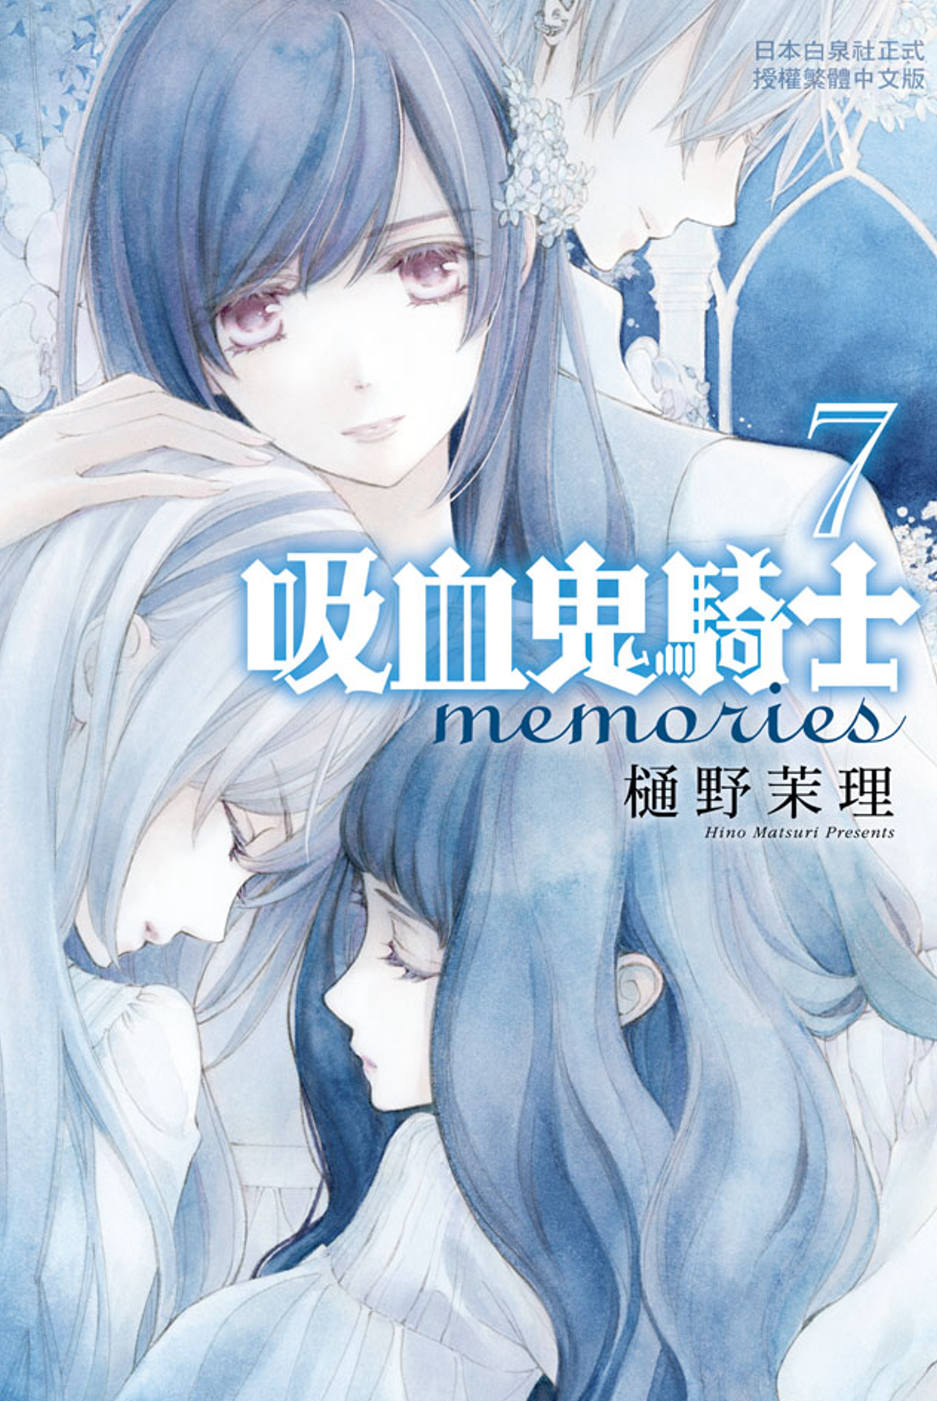 吸血鬼騎士 memories 7